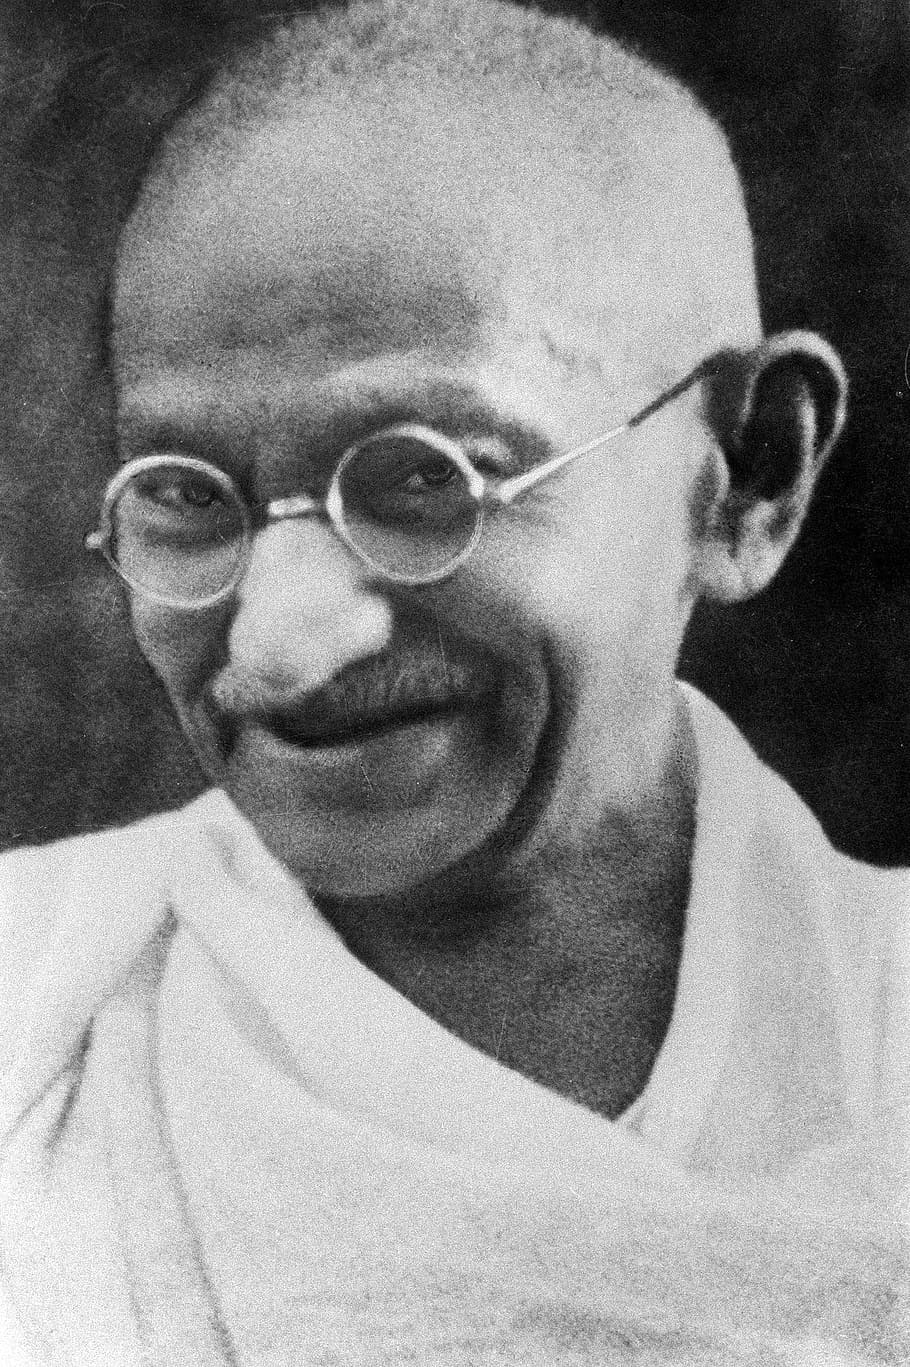 Mahatma Gandhi, pacifist, mohandas karamchand gandhi, spiritual leader, nonviolence, resistance, equality, racial segregation, 1940, portrait